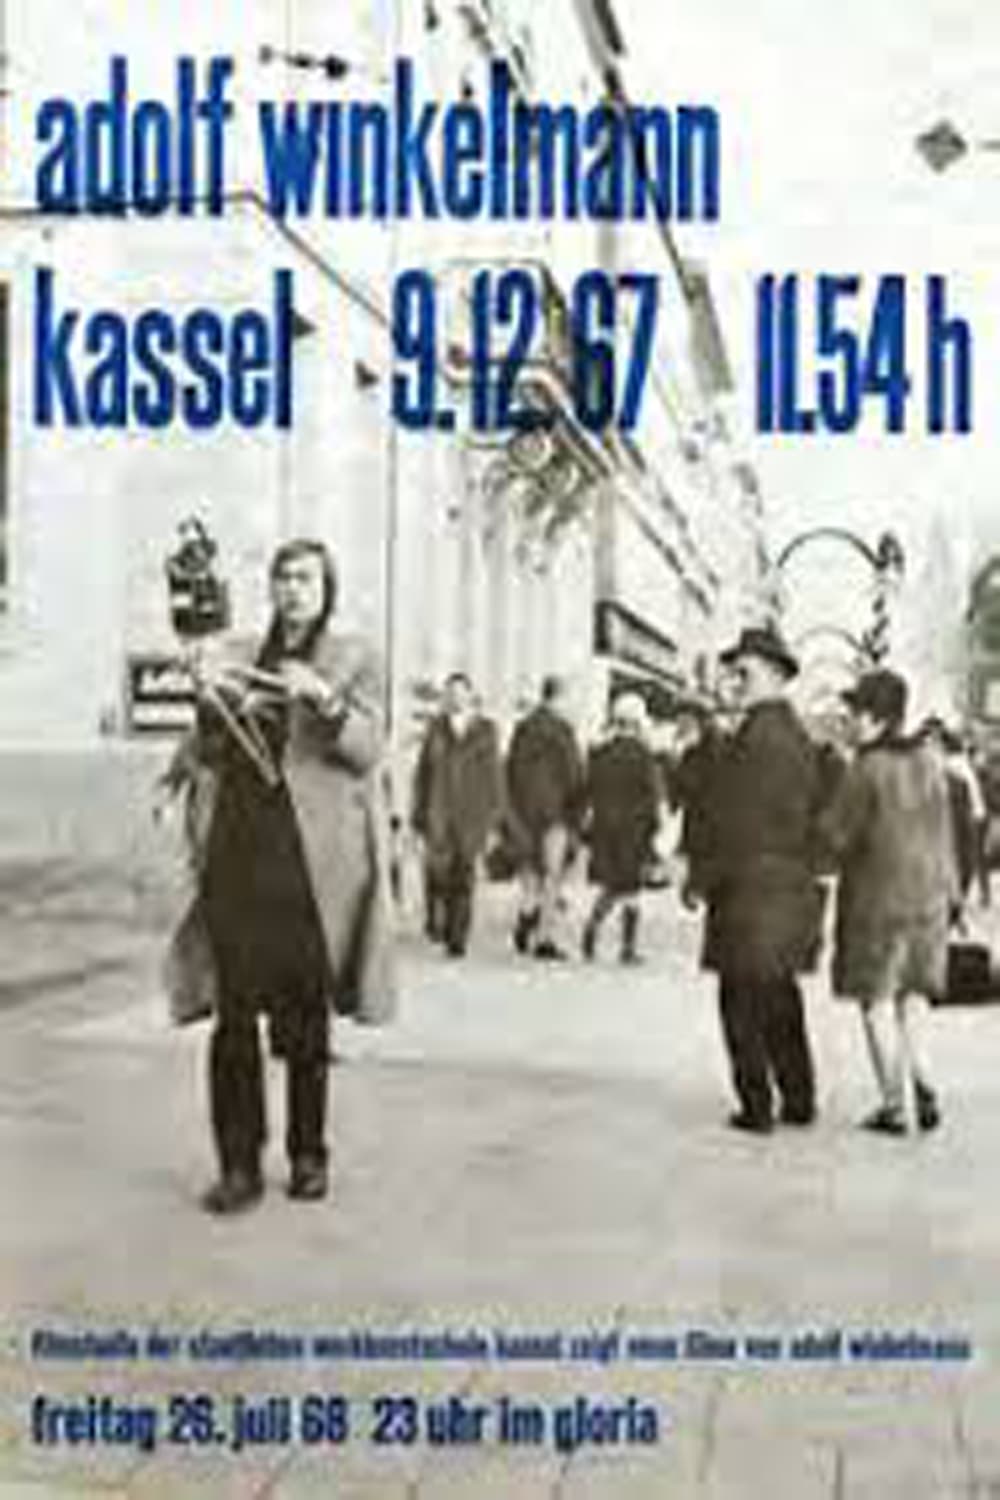 Adolf Winkelmann, Kassel, 9.12.1967, 11.54h